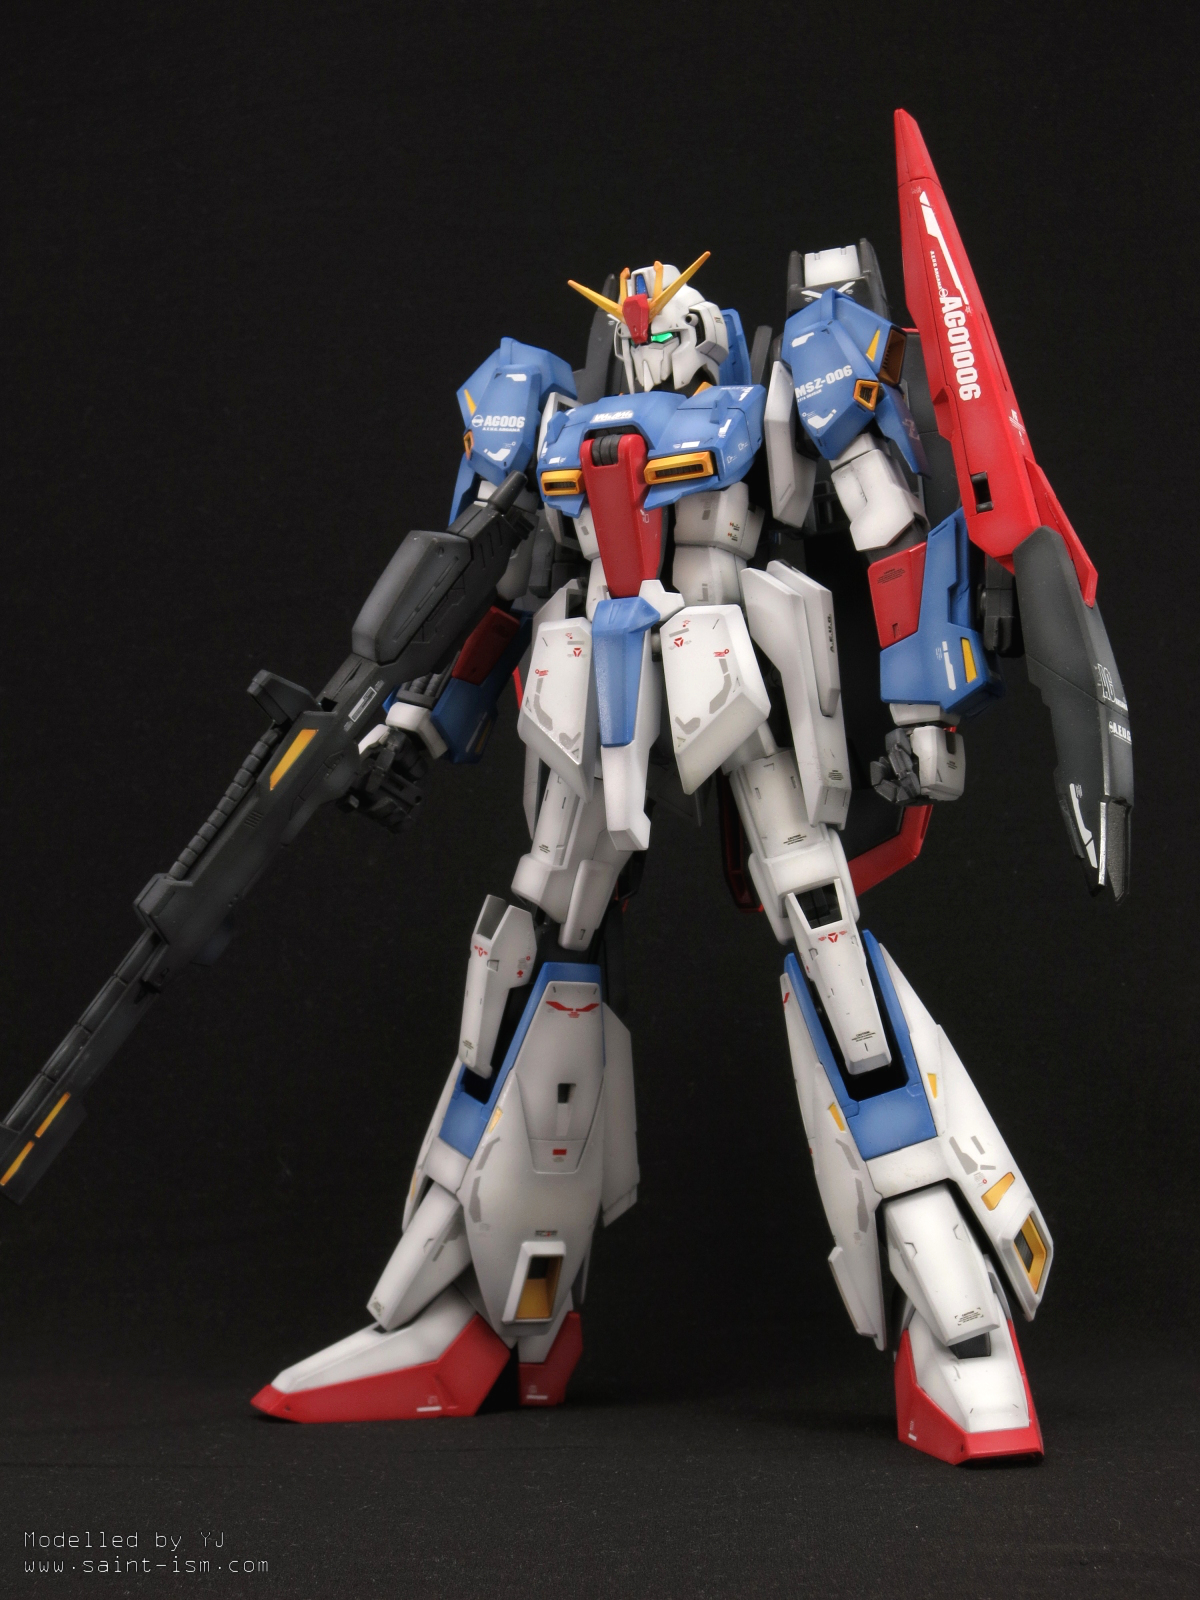 MG Zeta Gundam 2.0 Completed | Saint-ism – Gaming, Gunpla, Digital Art